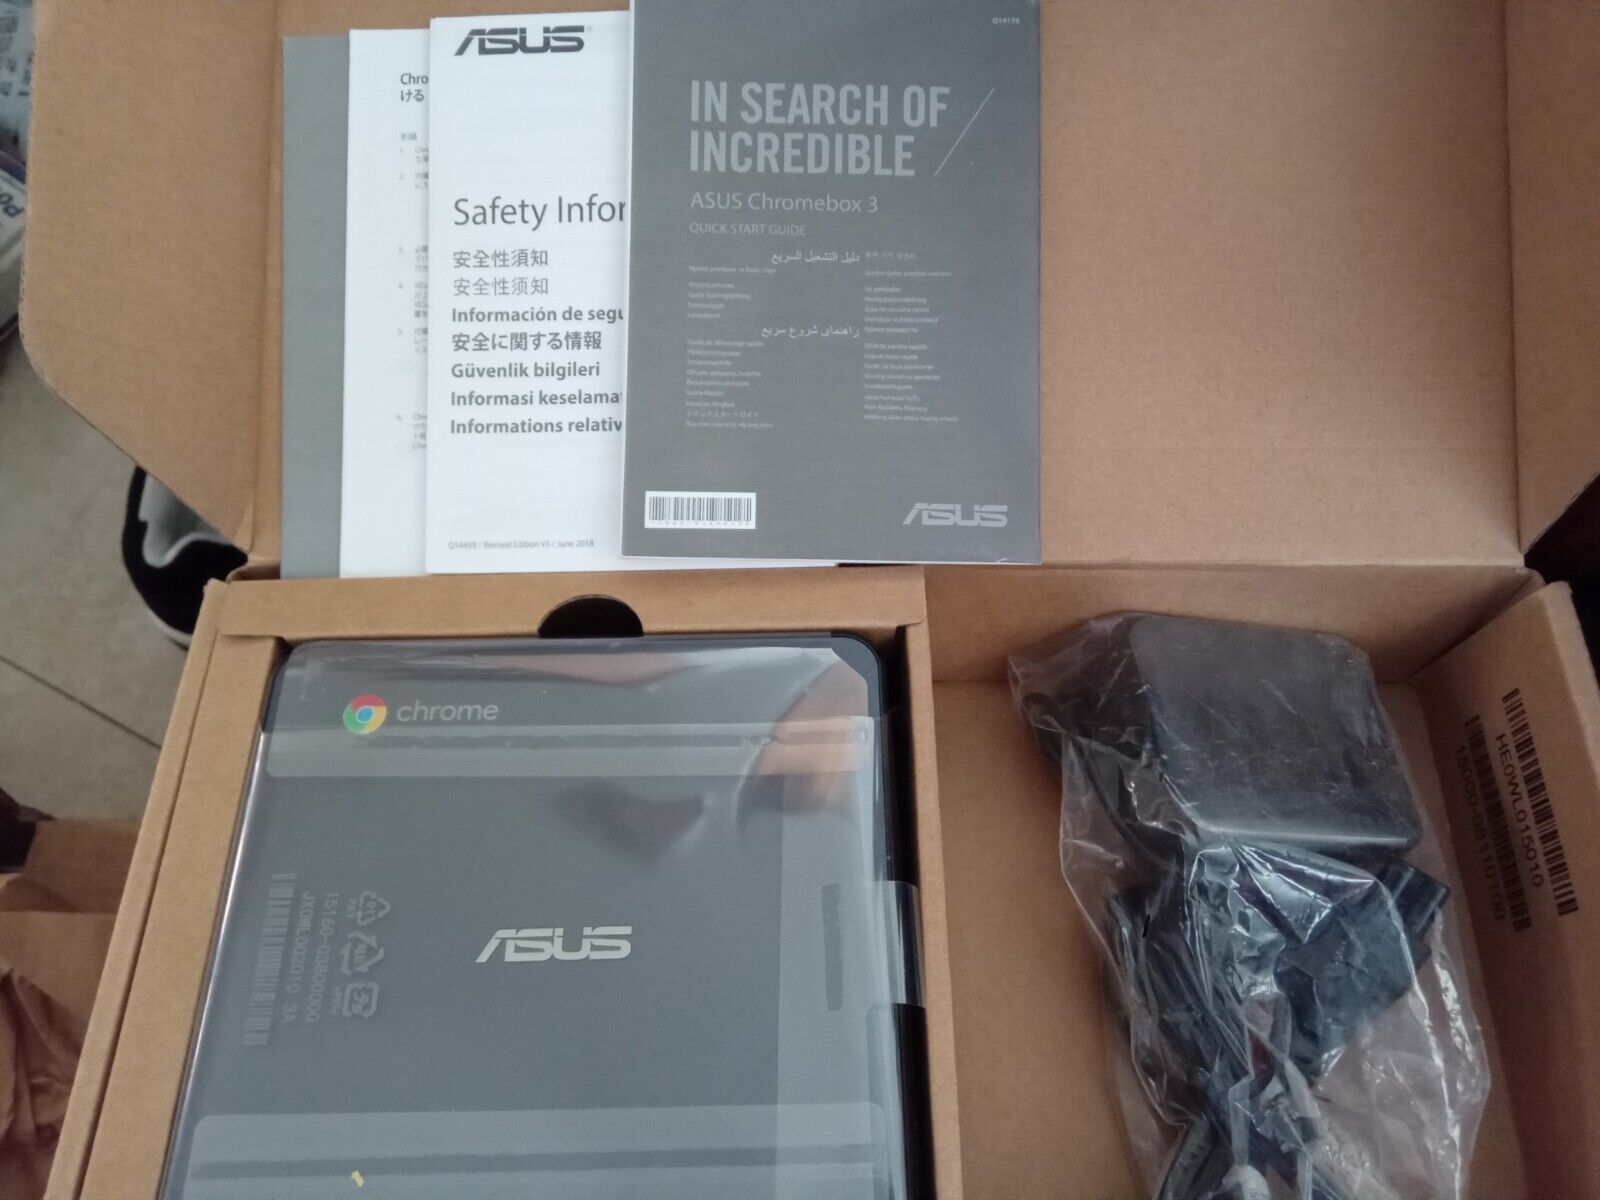 ASUS Chromebox 3 - 7265NGW - Intel Celeron 3865U - 4GB 32GB SSD